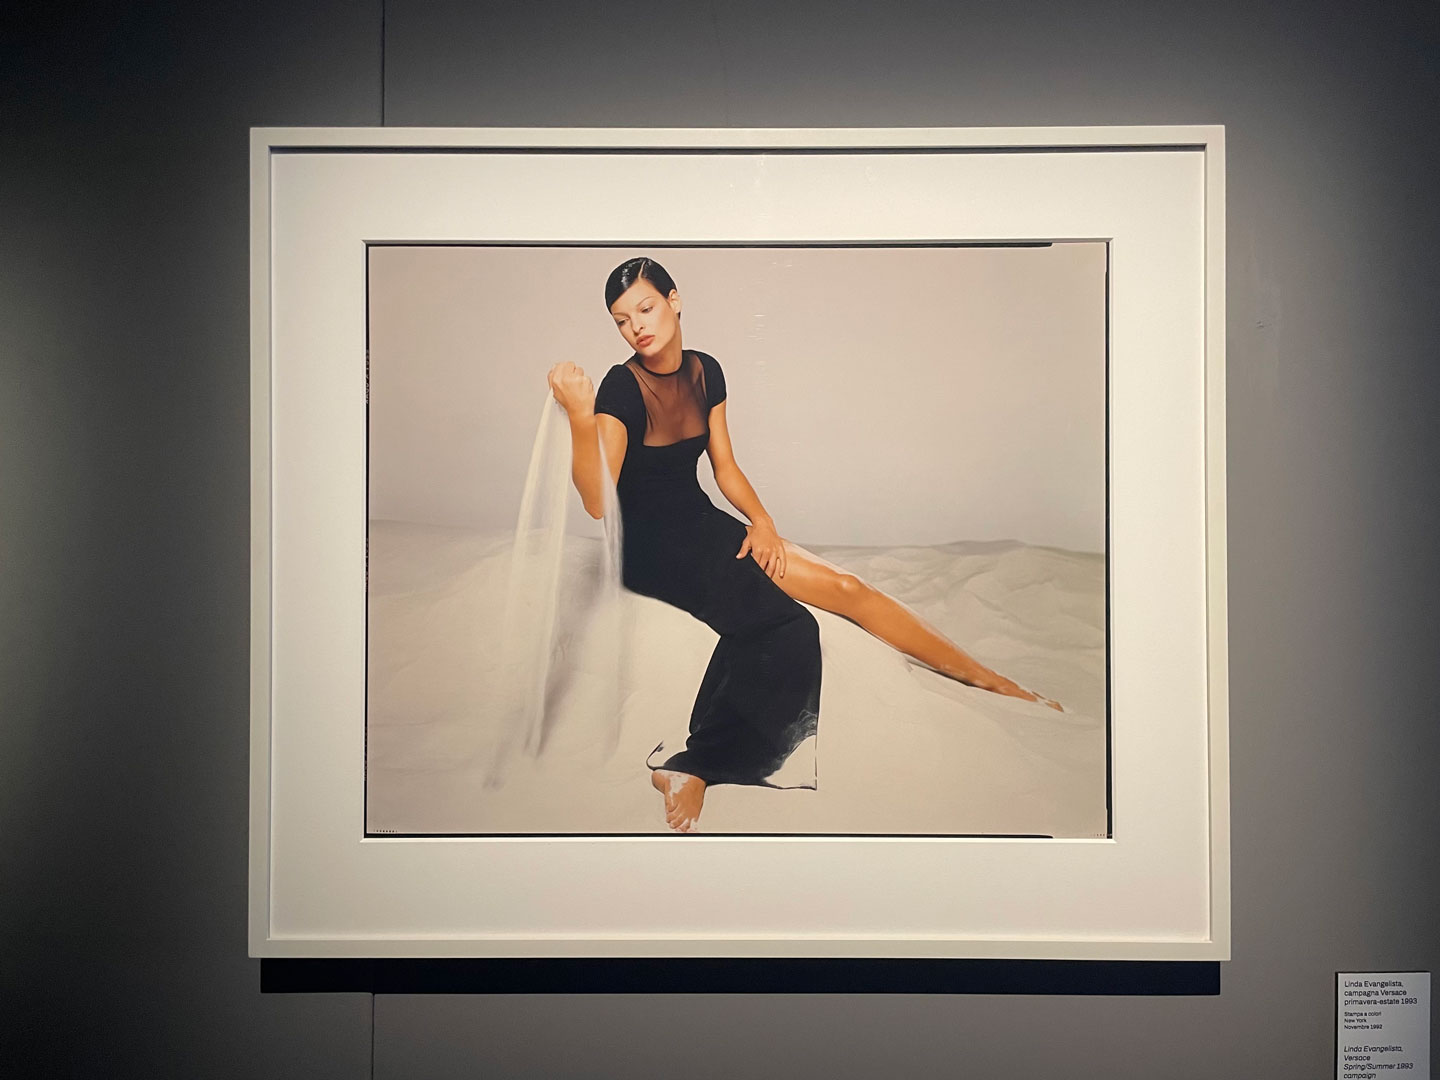 Richard Avedon, "Linda Evangelista, Versace spring-summer 1993 campaign, New York," November 1992